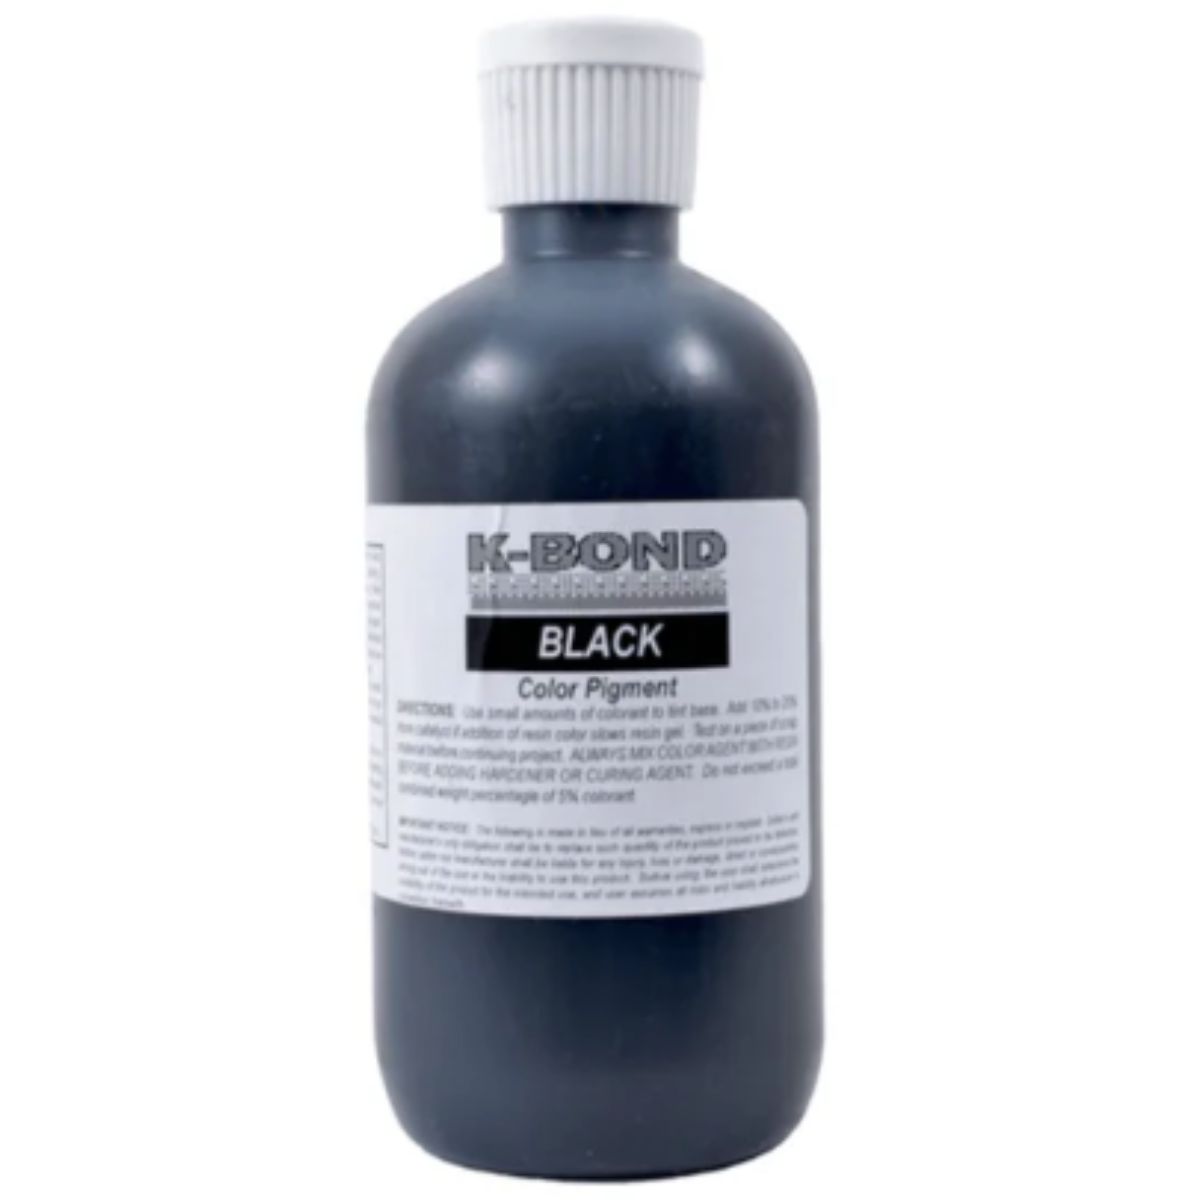 Adhesive Color Pigment - Black, 8 oz